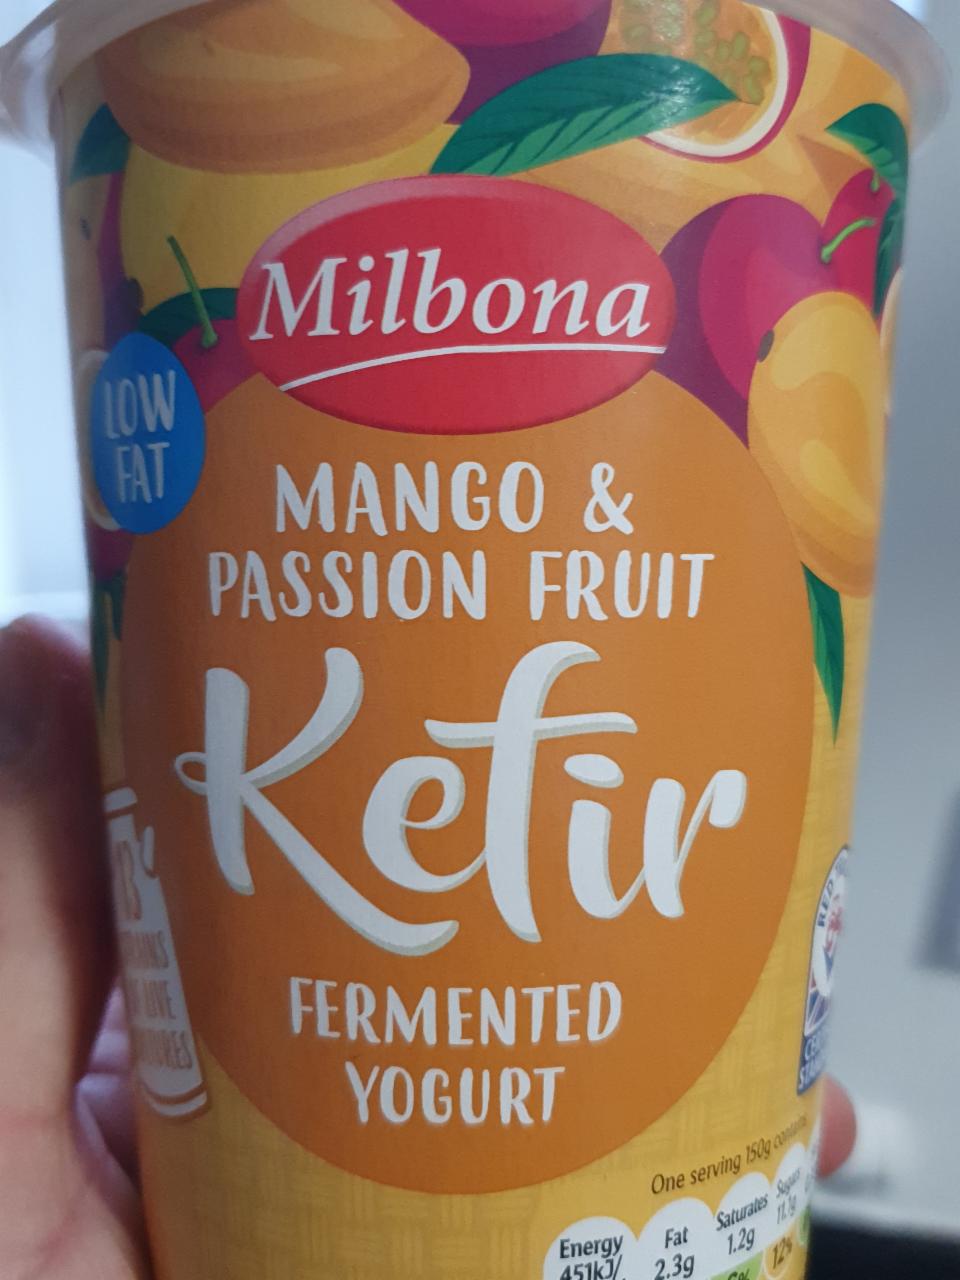 Fotografie - mango & passion fruit kefir milbona